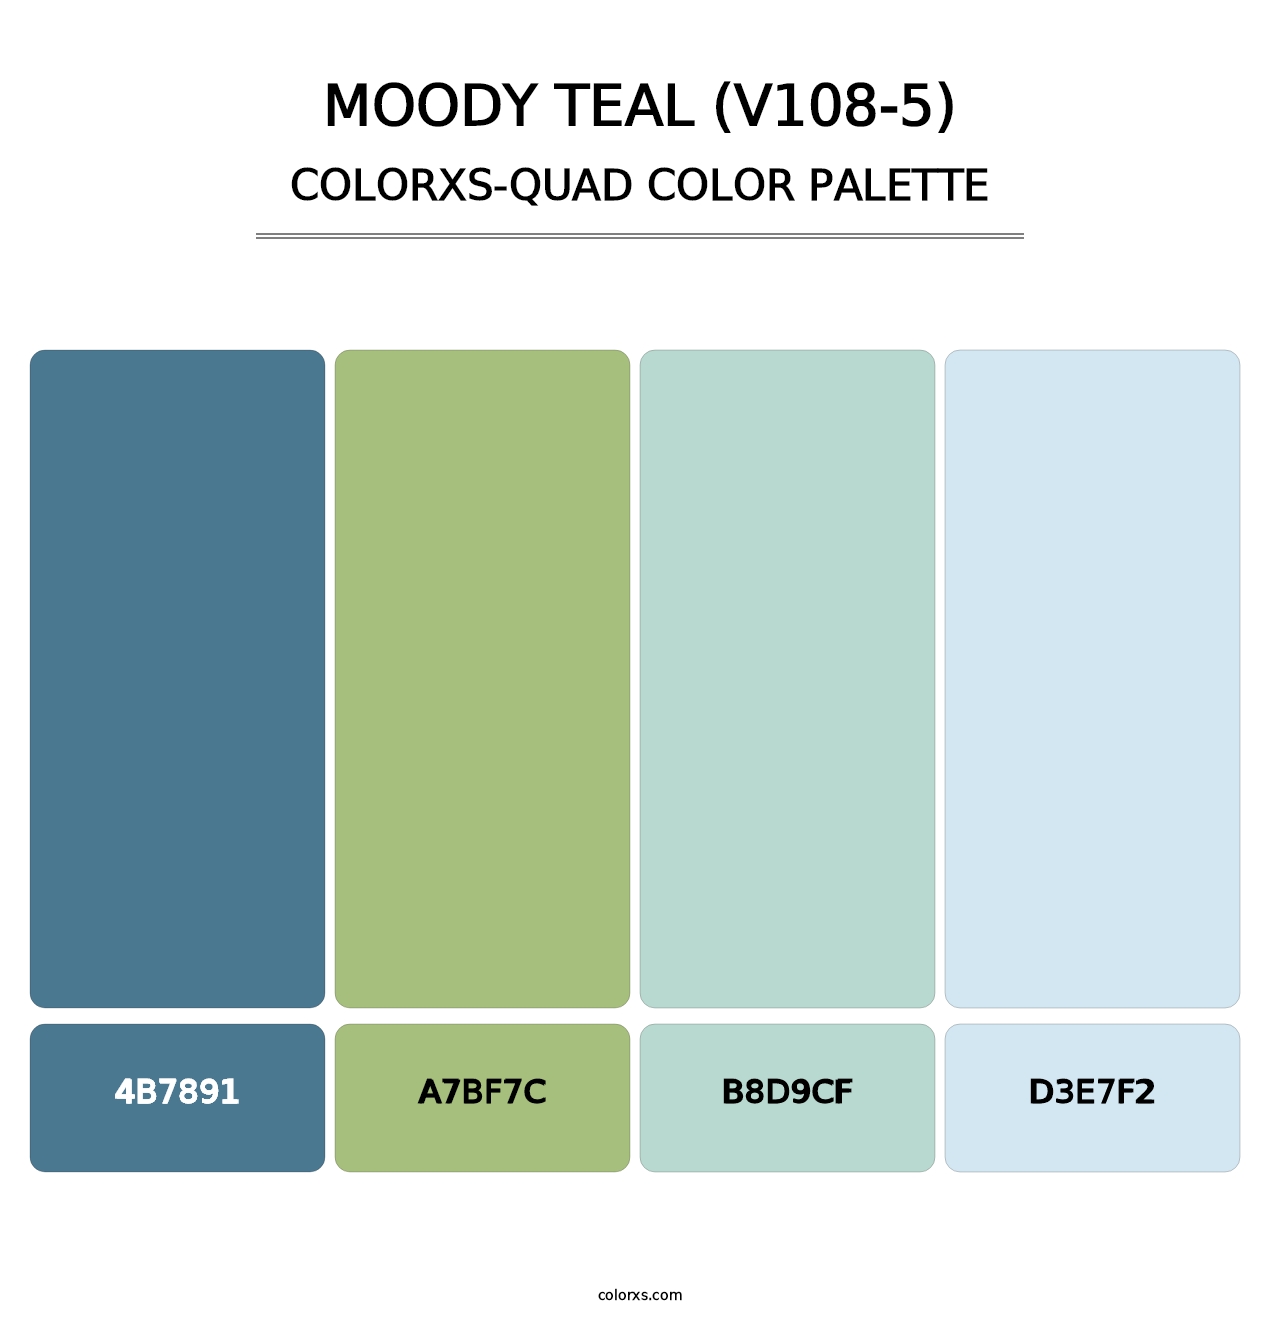 Moody Teal (V108-5) - Colorxs Quad Palette